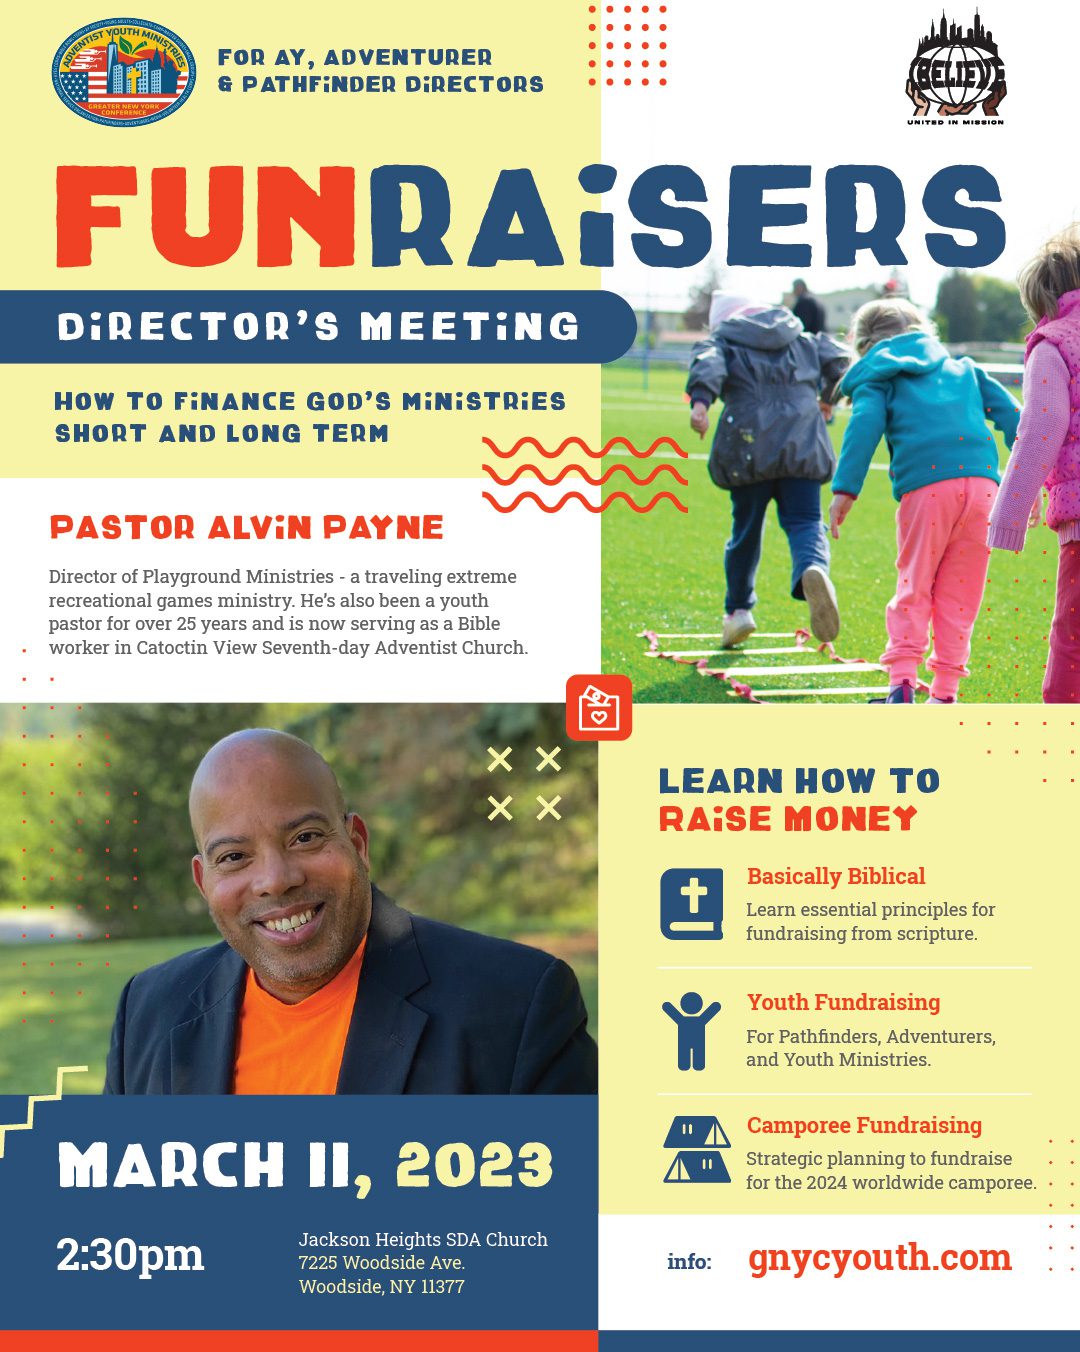 "FUN" Raisers Director's Meeting with Pastor Alvin Payne_PrAlvinPayne_GNYCyouth_0223